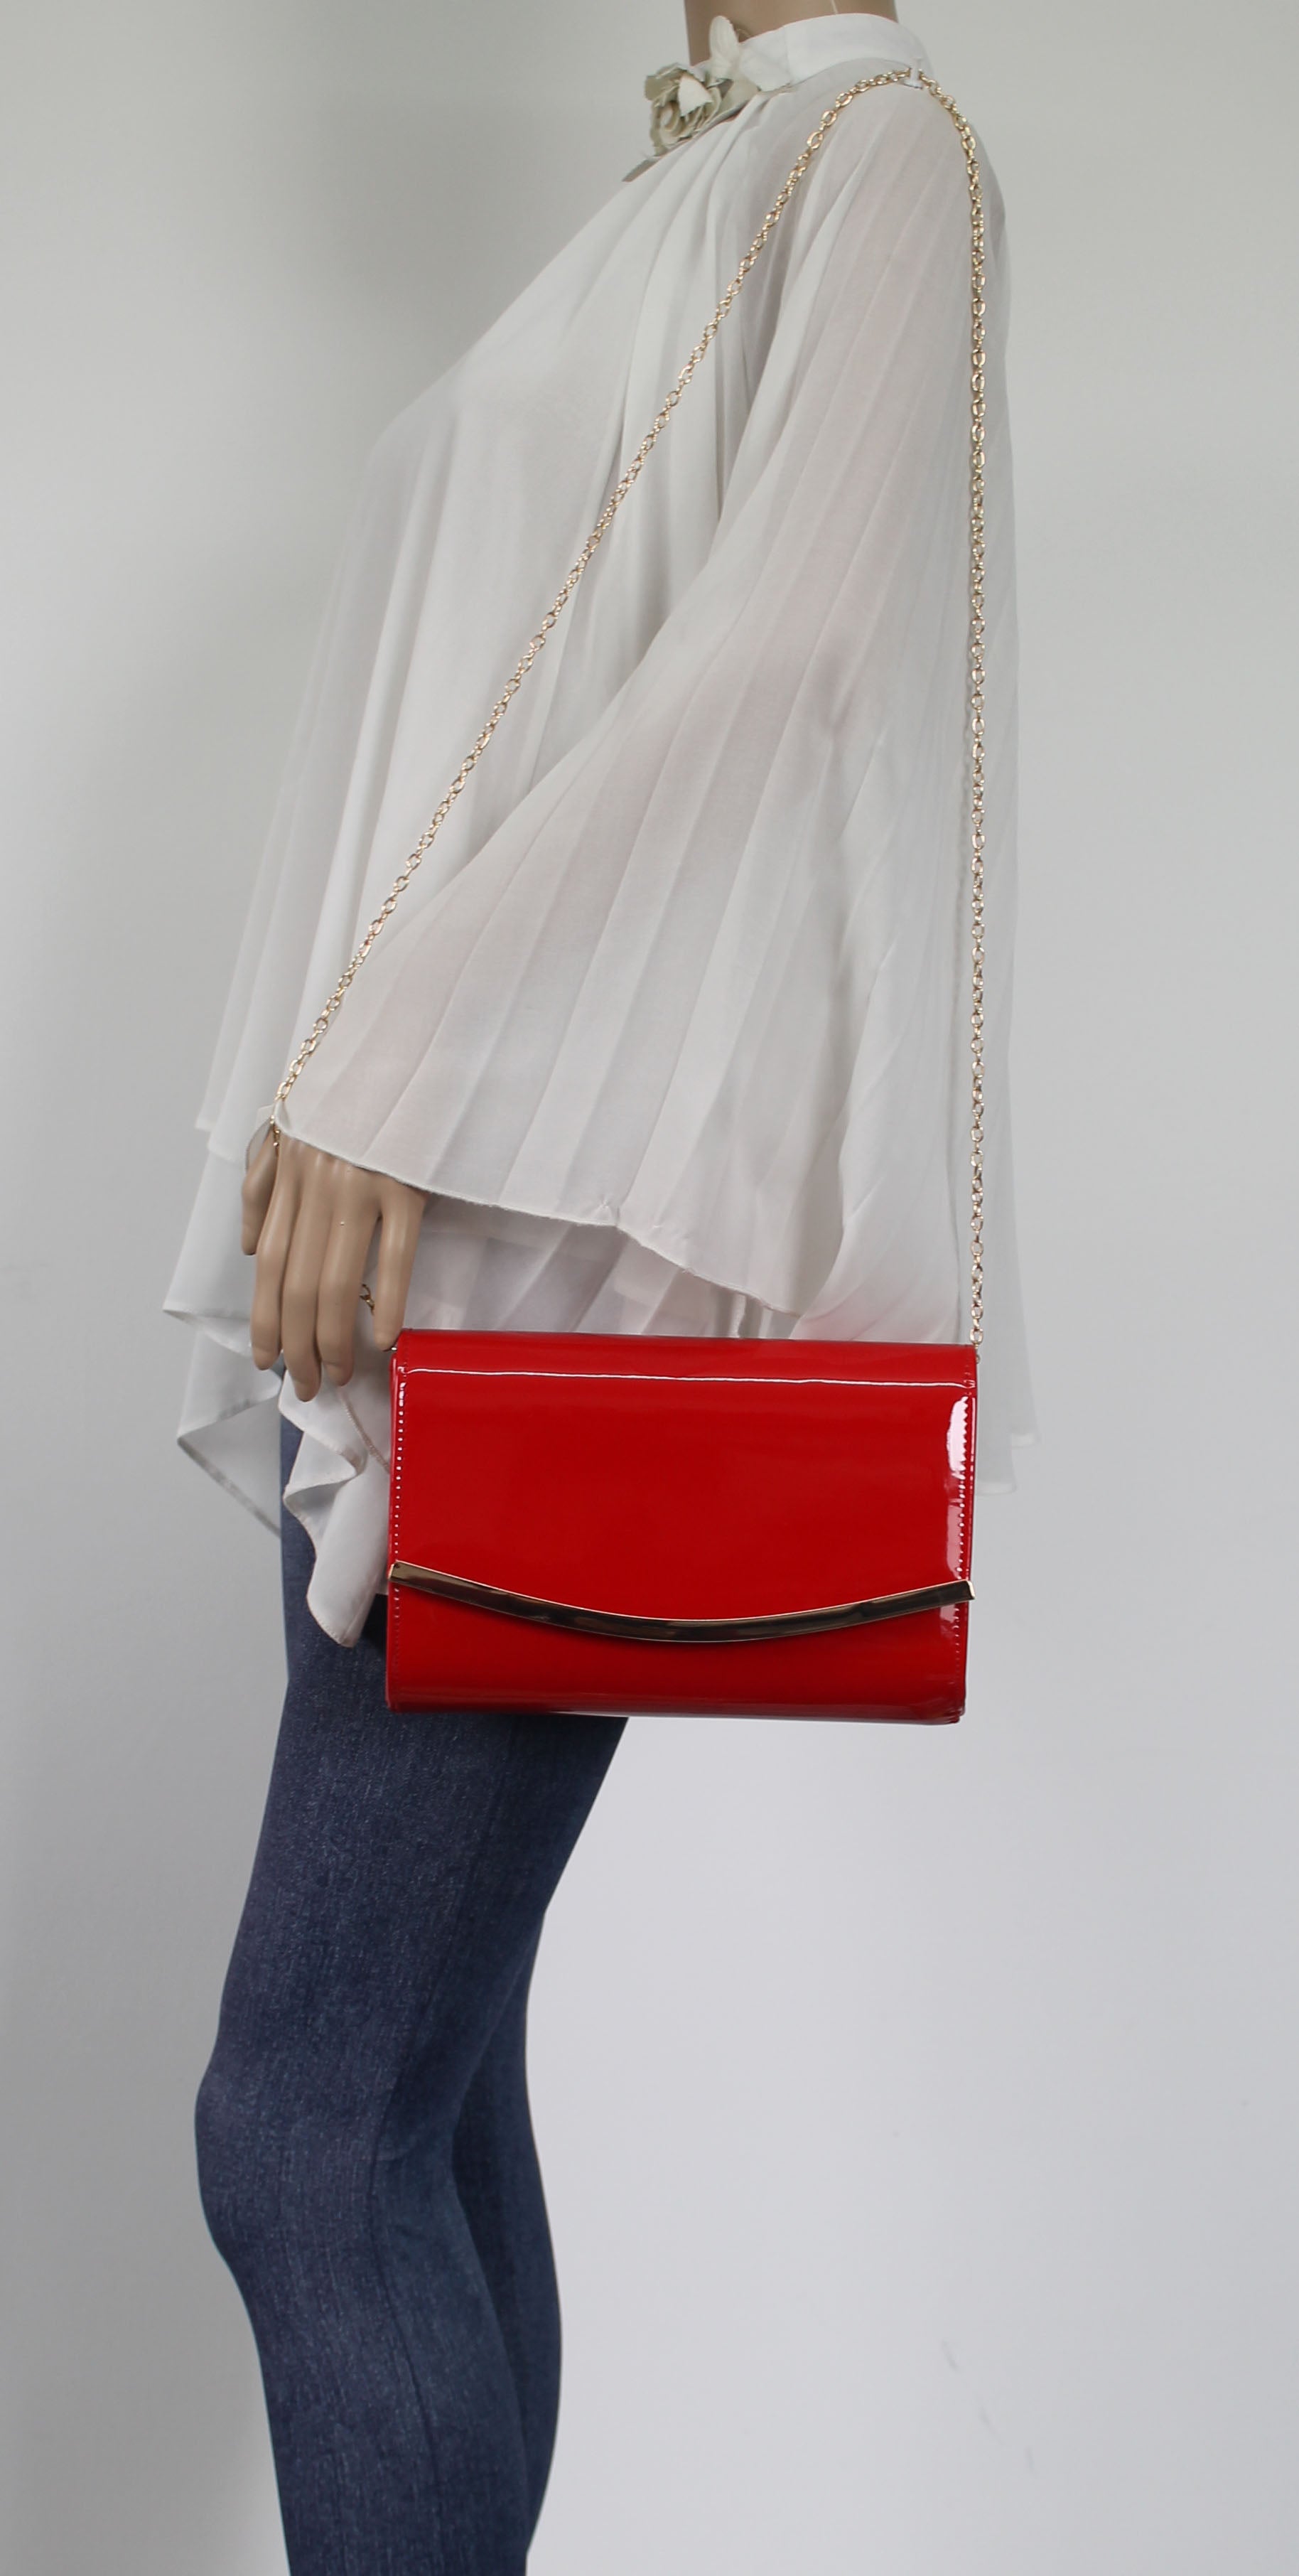 SWANKYSWANS Lilo Clutch Bag Red Cute Cheap Clutch Bag For Weddings School and Work